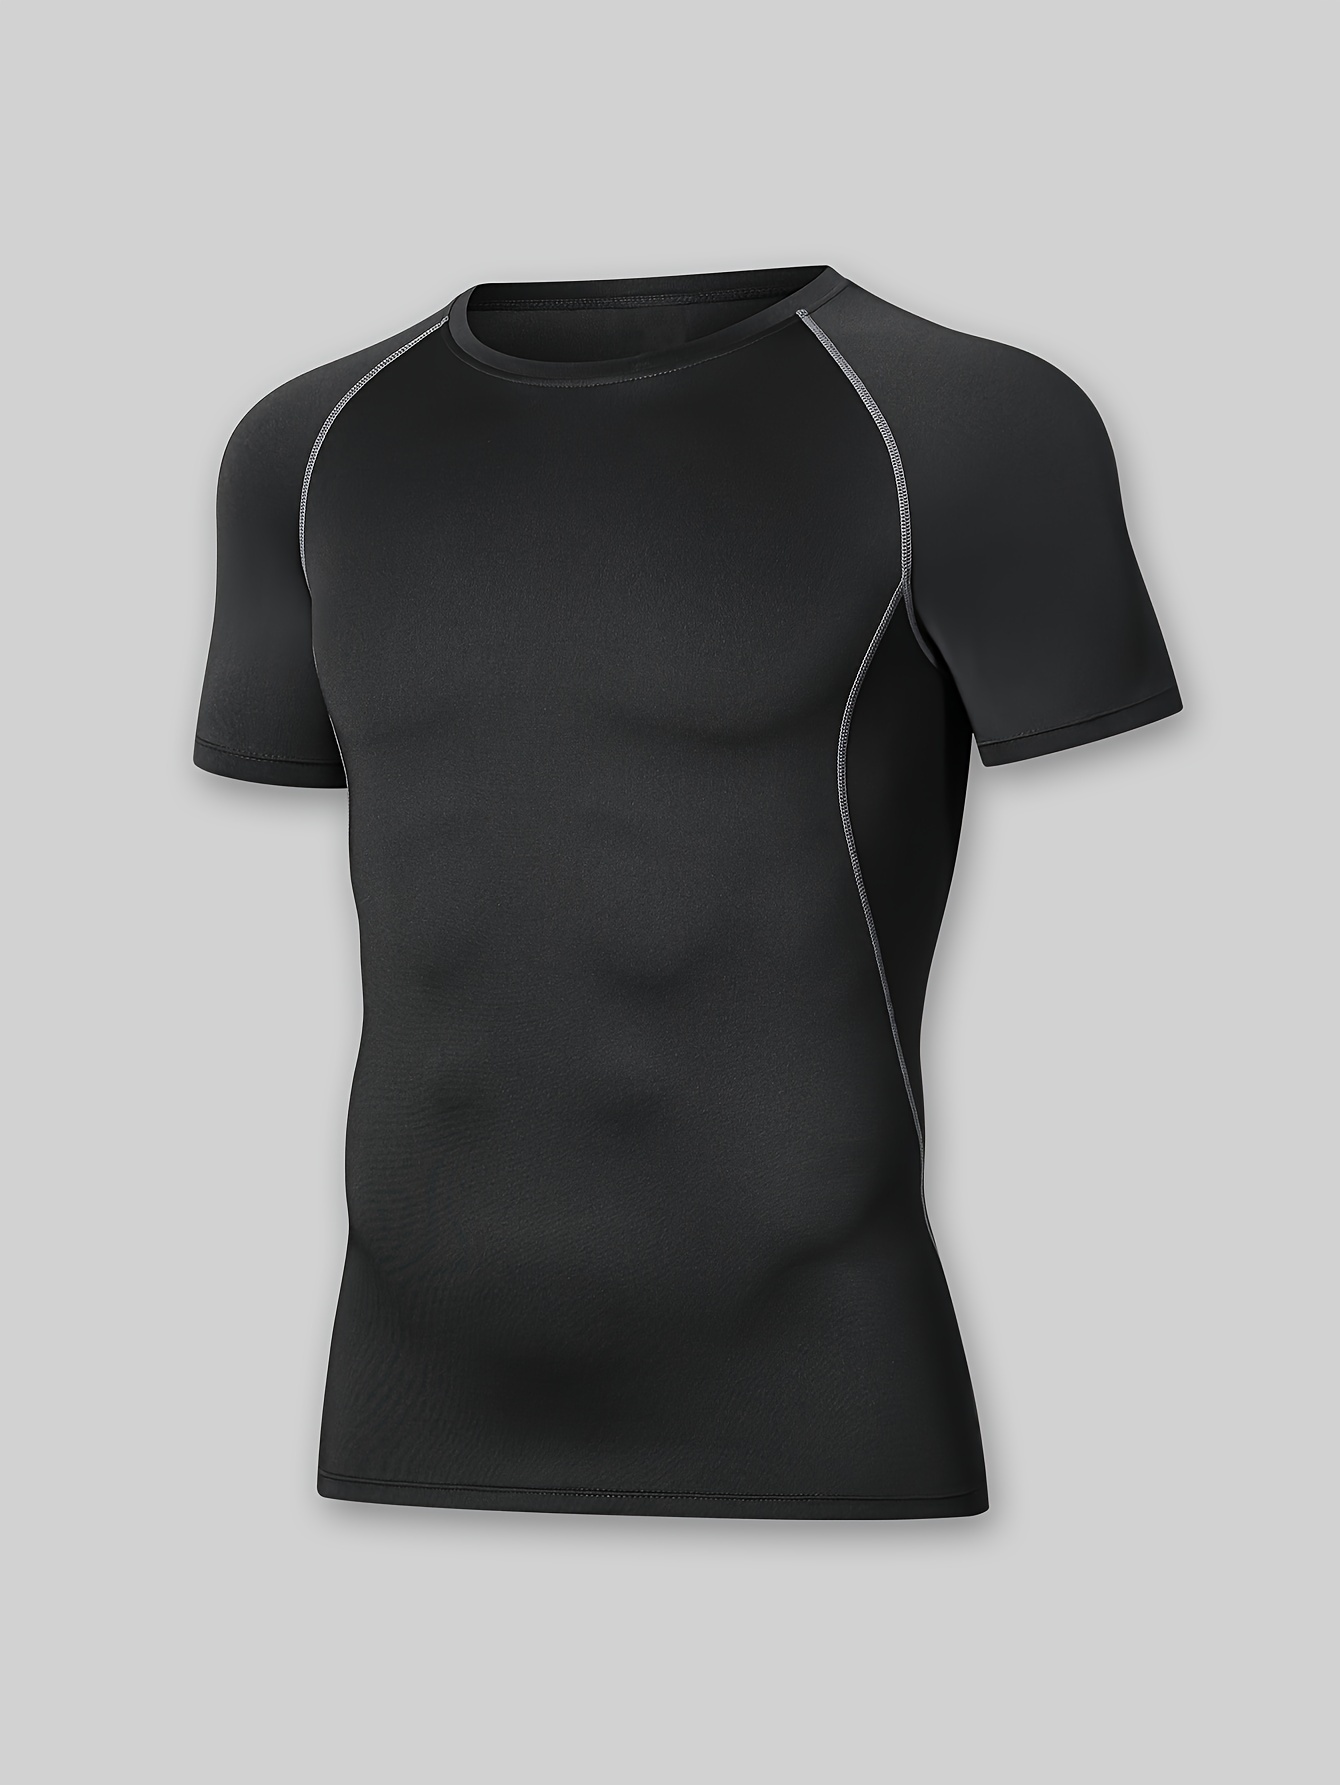 Men's Long Sleeve Compression Shirts: Perfect Workouts Yoga - Temu